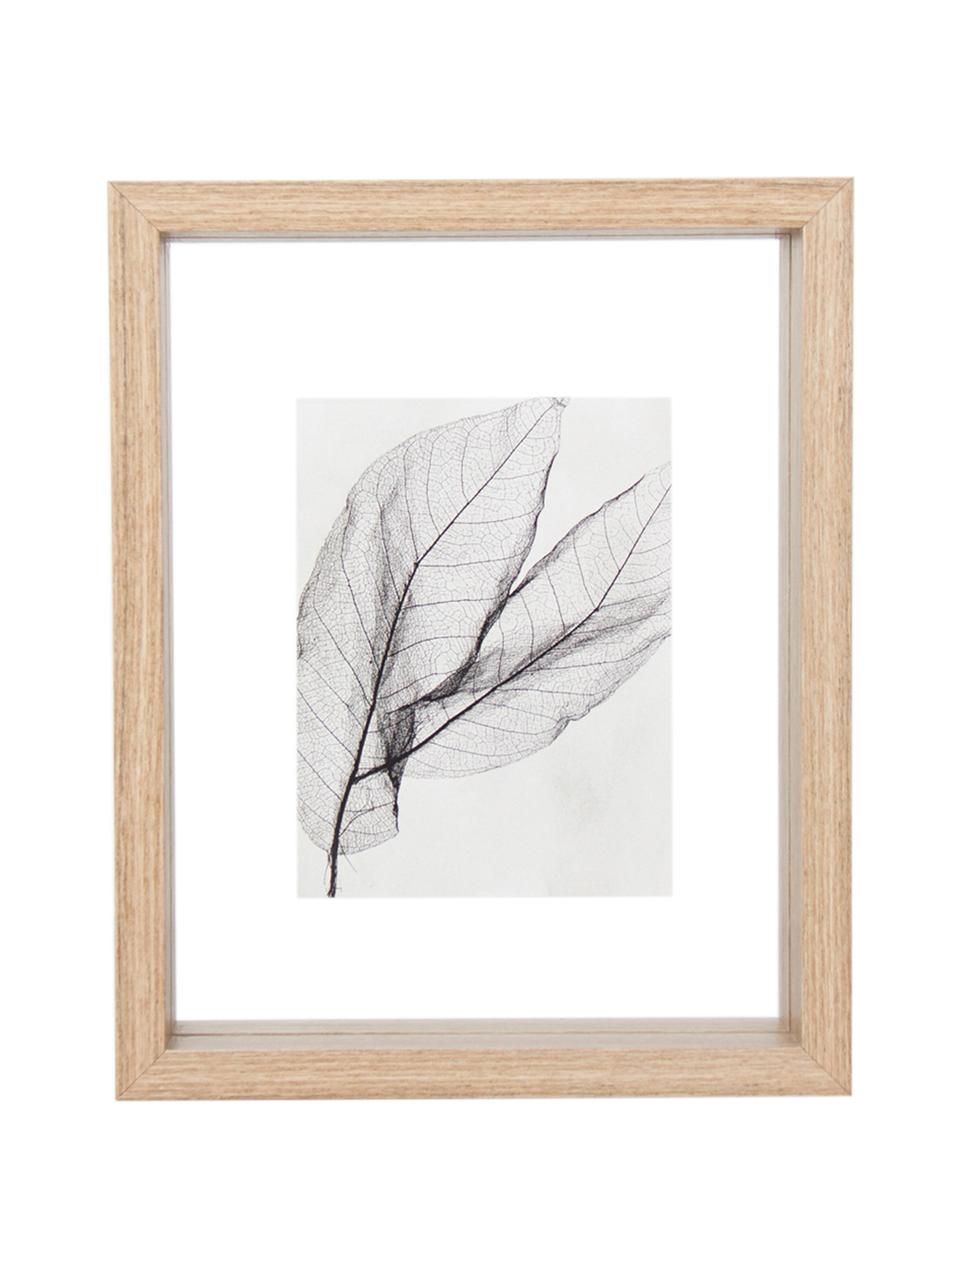 Bilderrahmen Look, Rahmen: Holz, Schwarz, Transparent, 15 x 20 cm